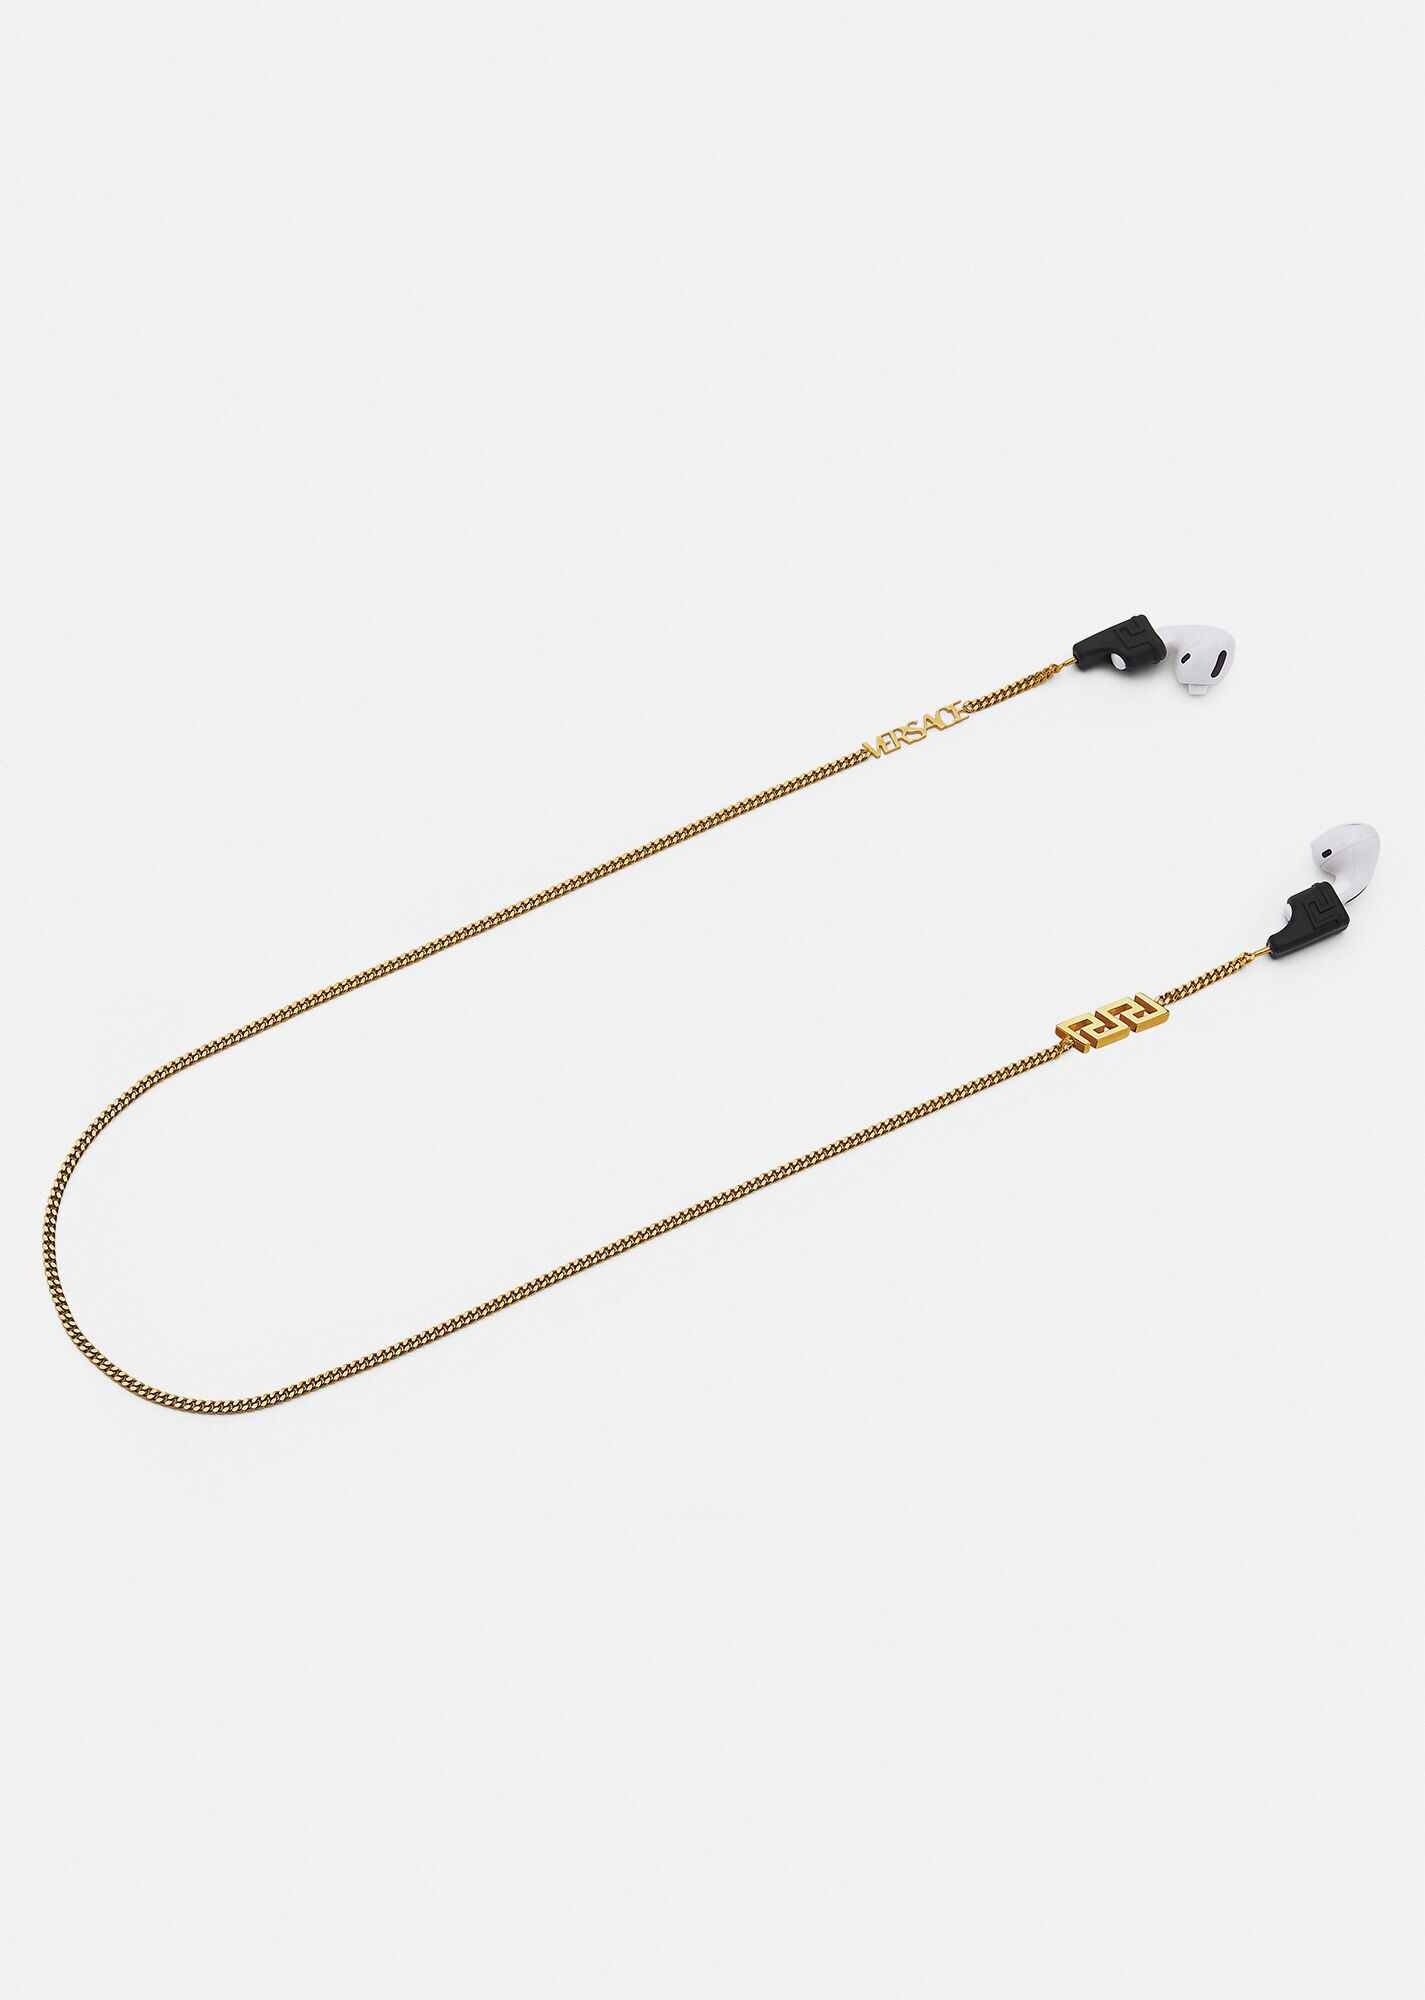 Greca wireless headphone chain - 1